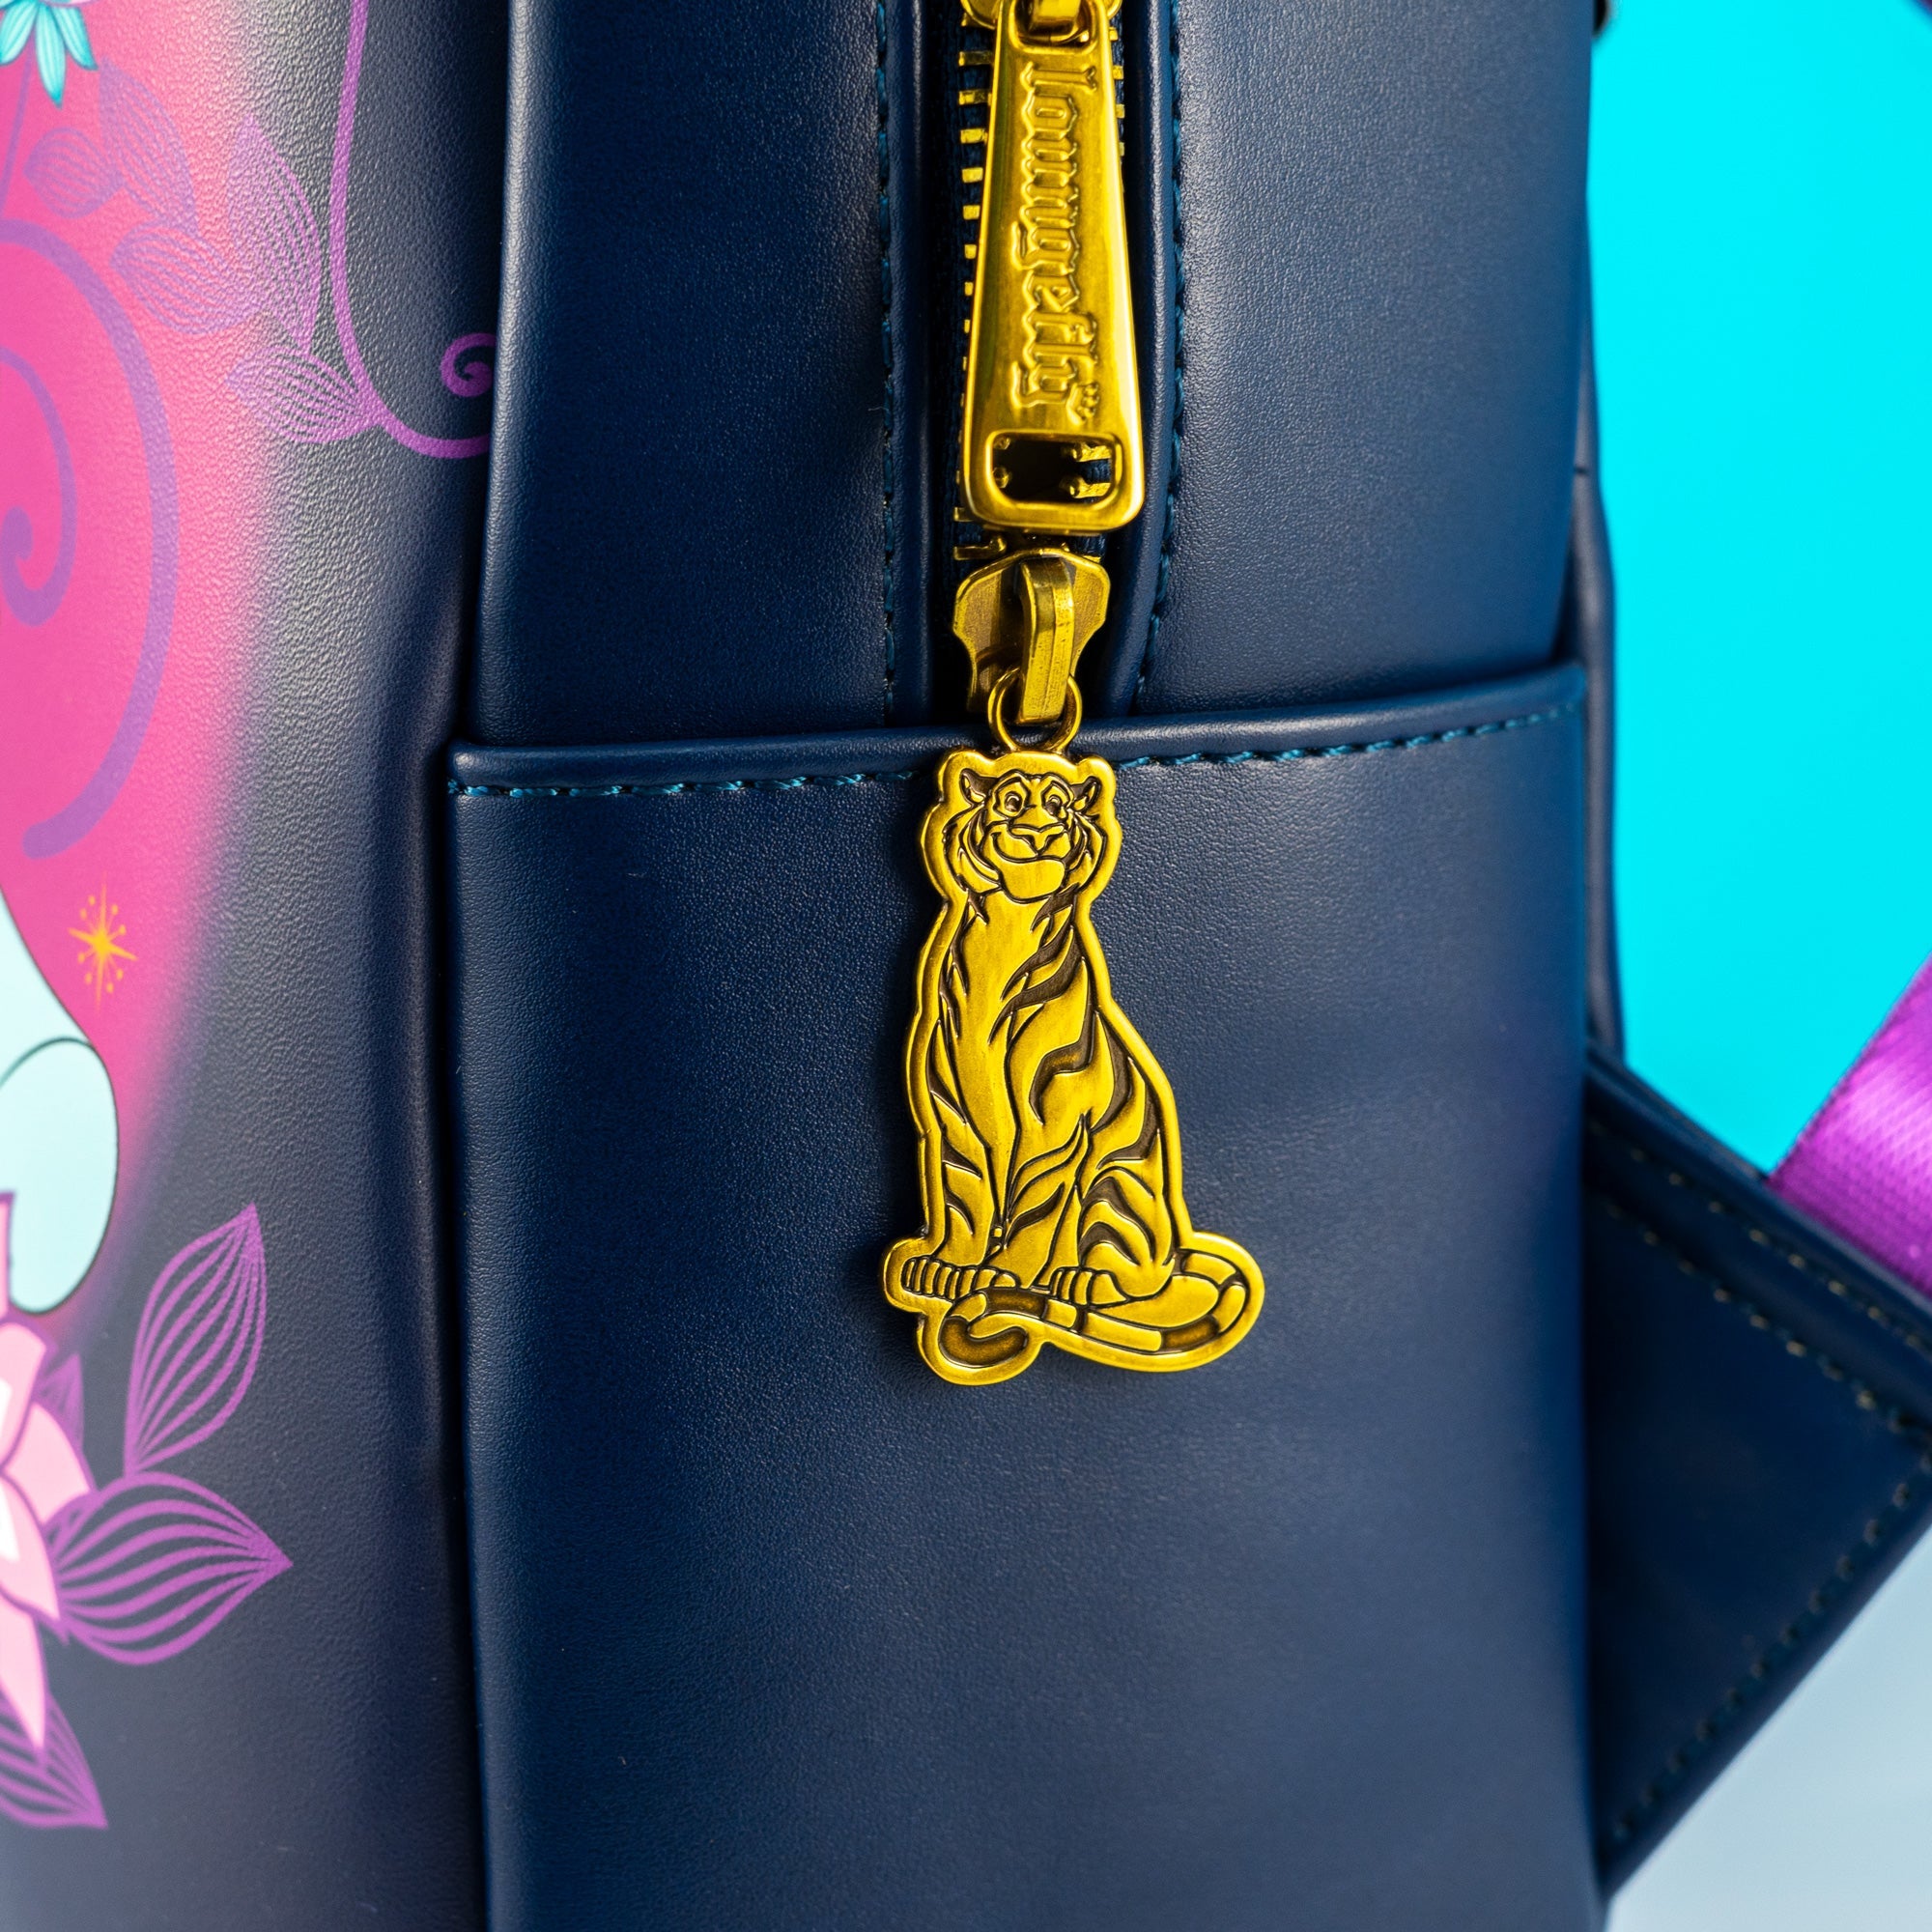 Loungefly x Disney Aladdin Princess Jasmine and Rajah Floral Print Mini Backpack - GeekCore